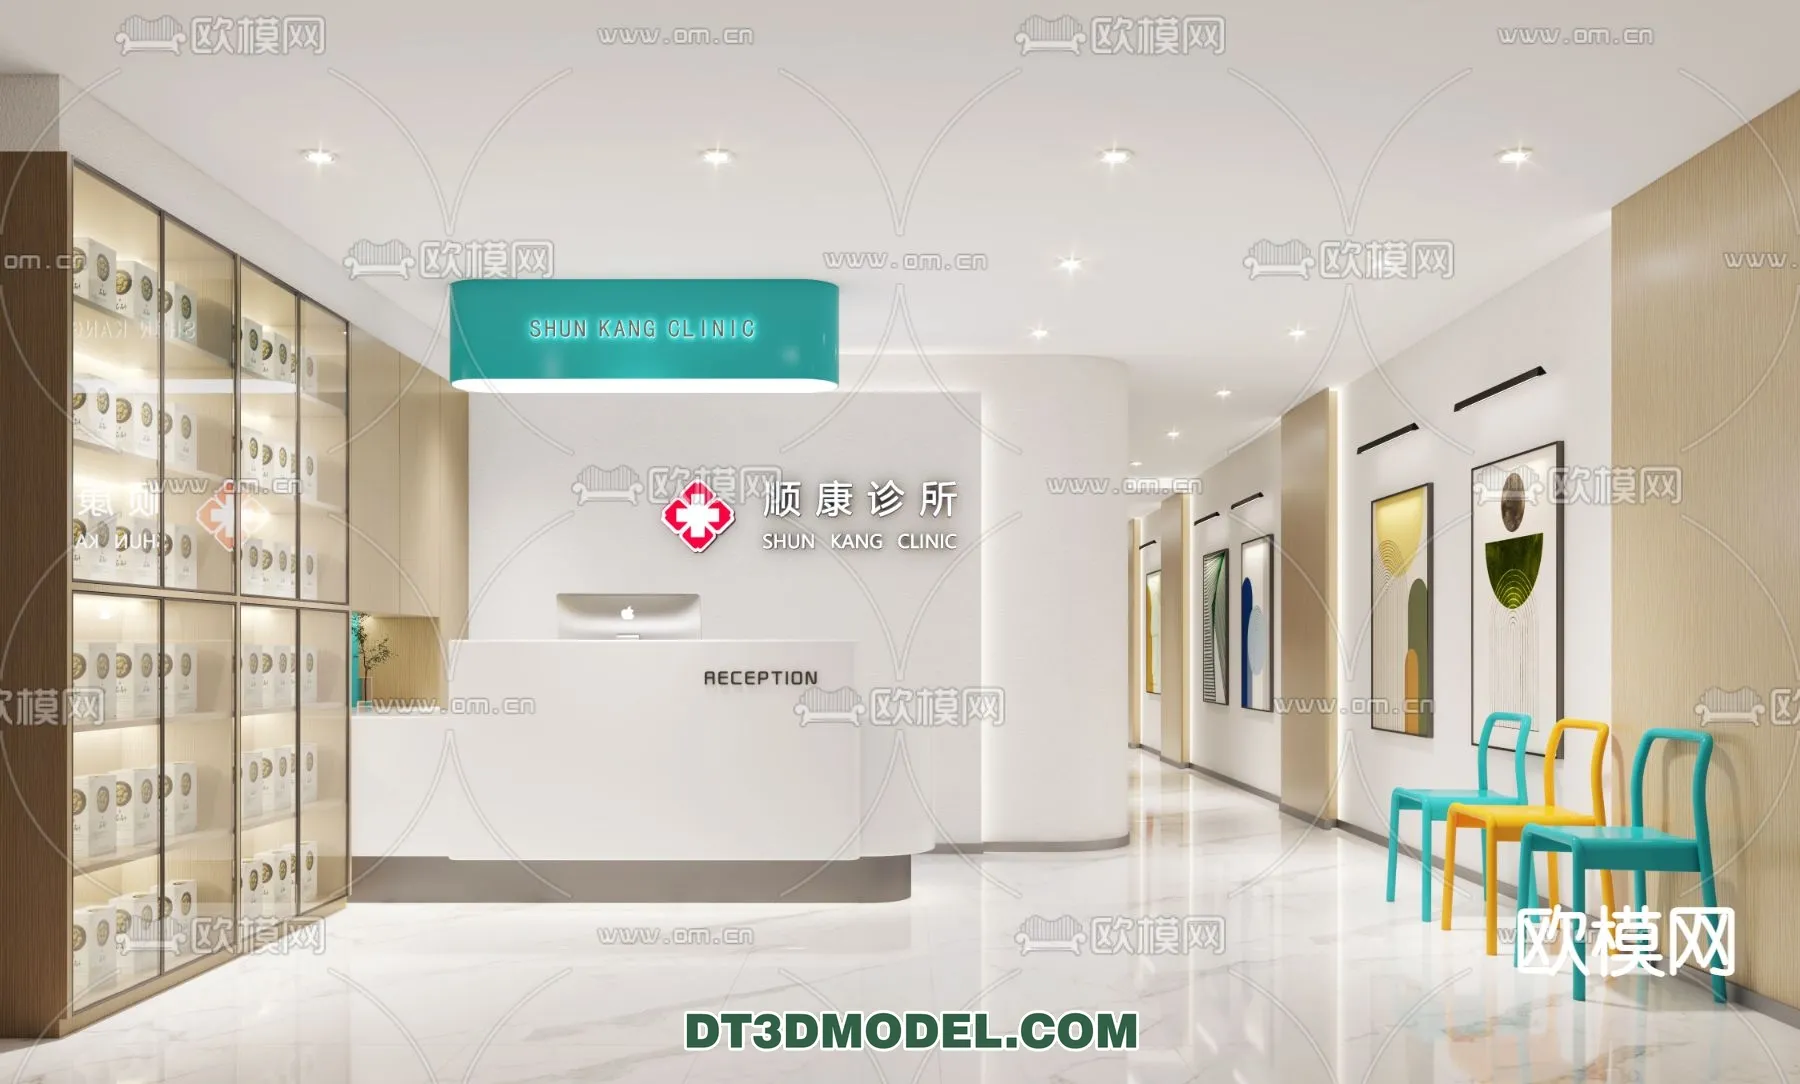 HOSPITAL 3D SCENES – MODERN – 0123